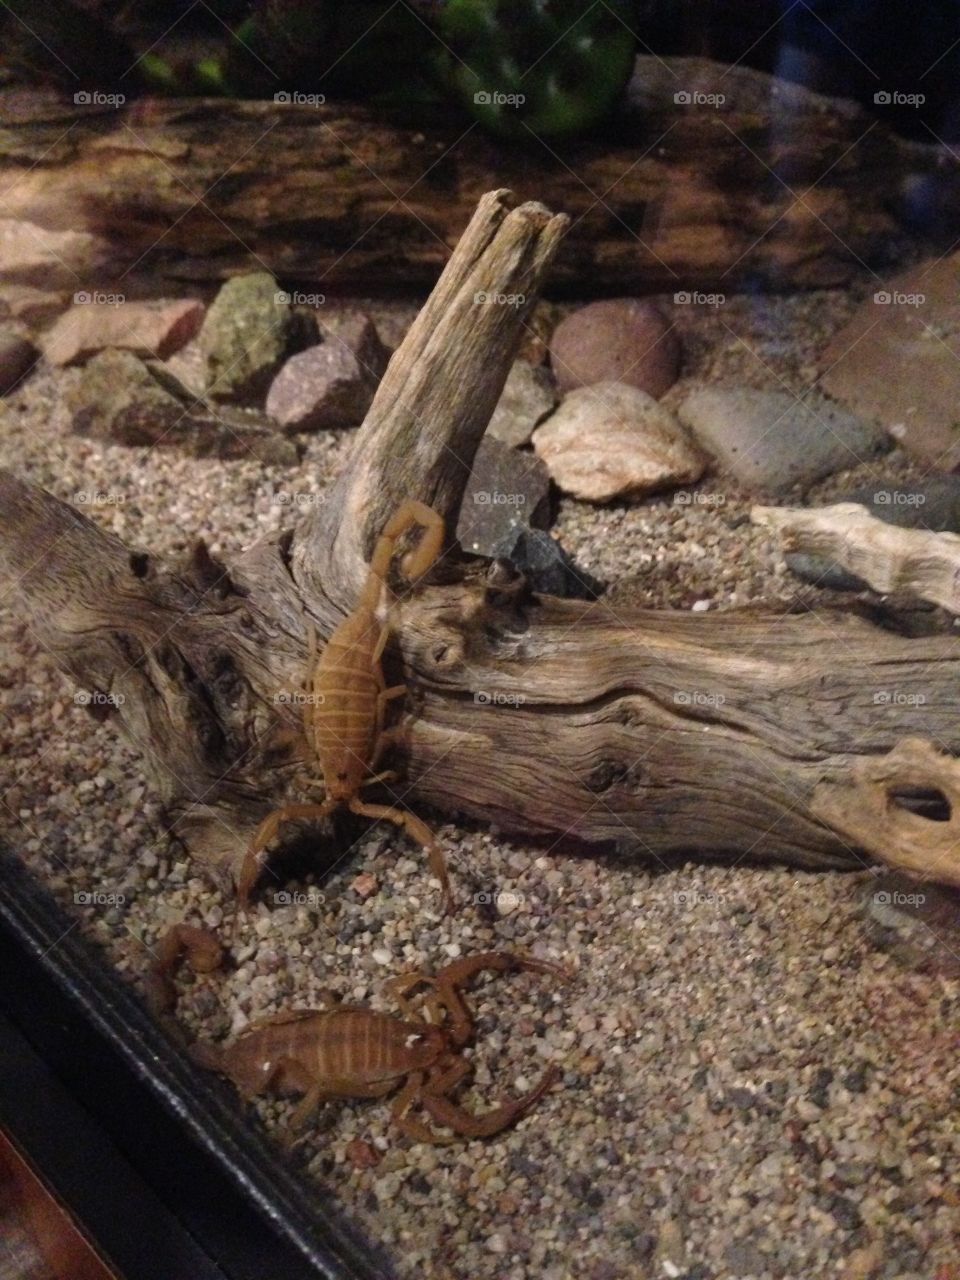 A scorpion crawling over sticks